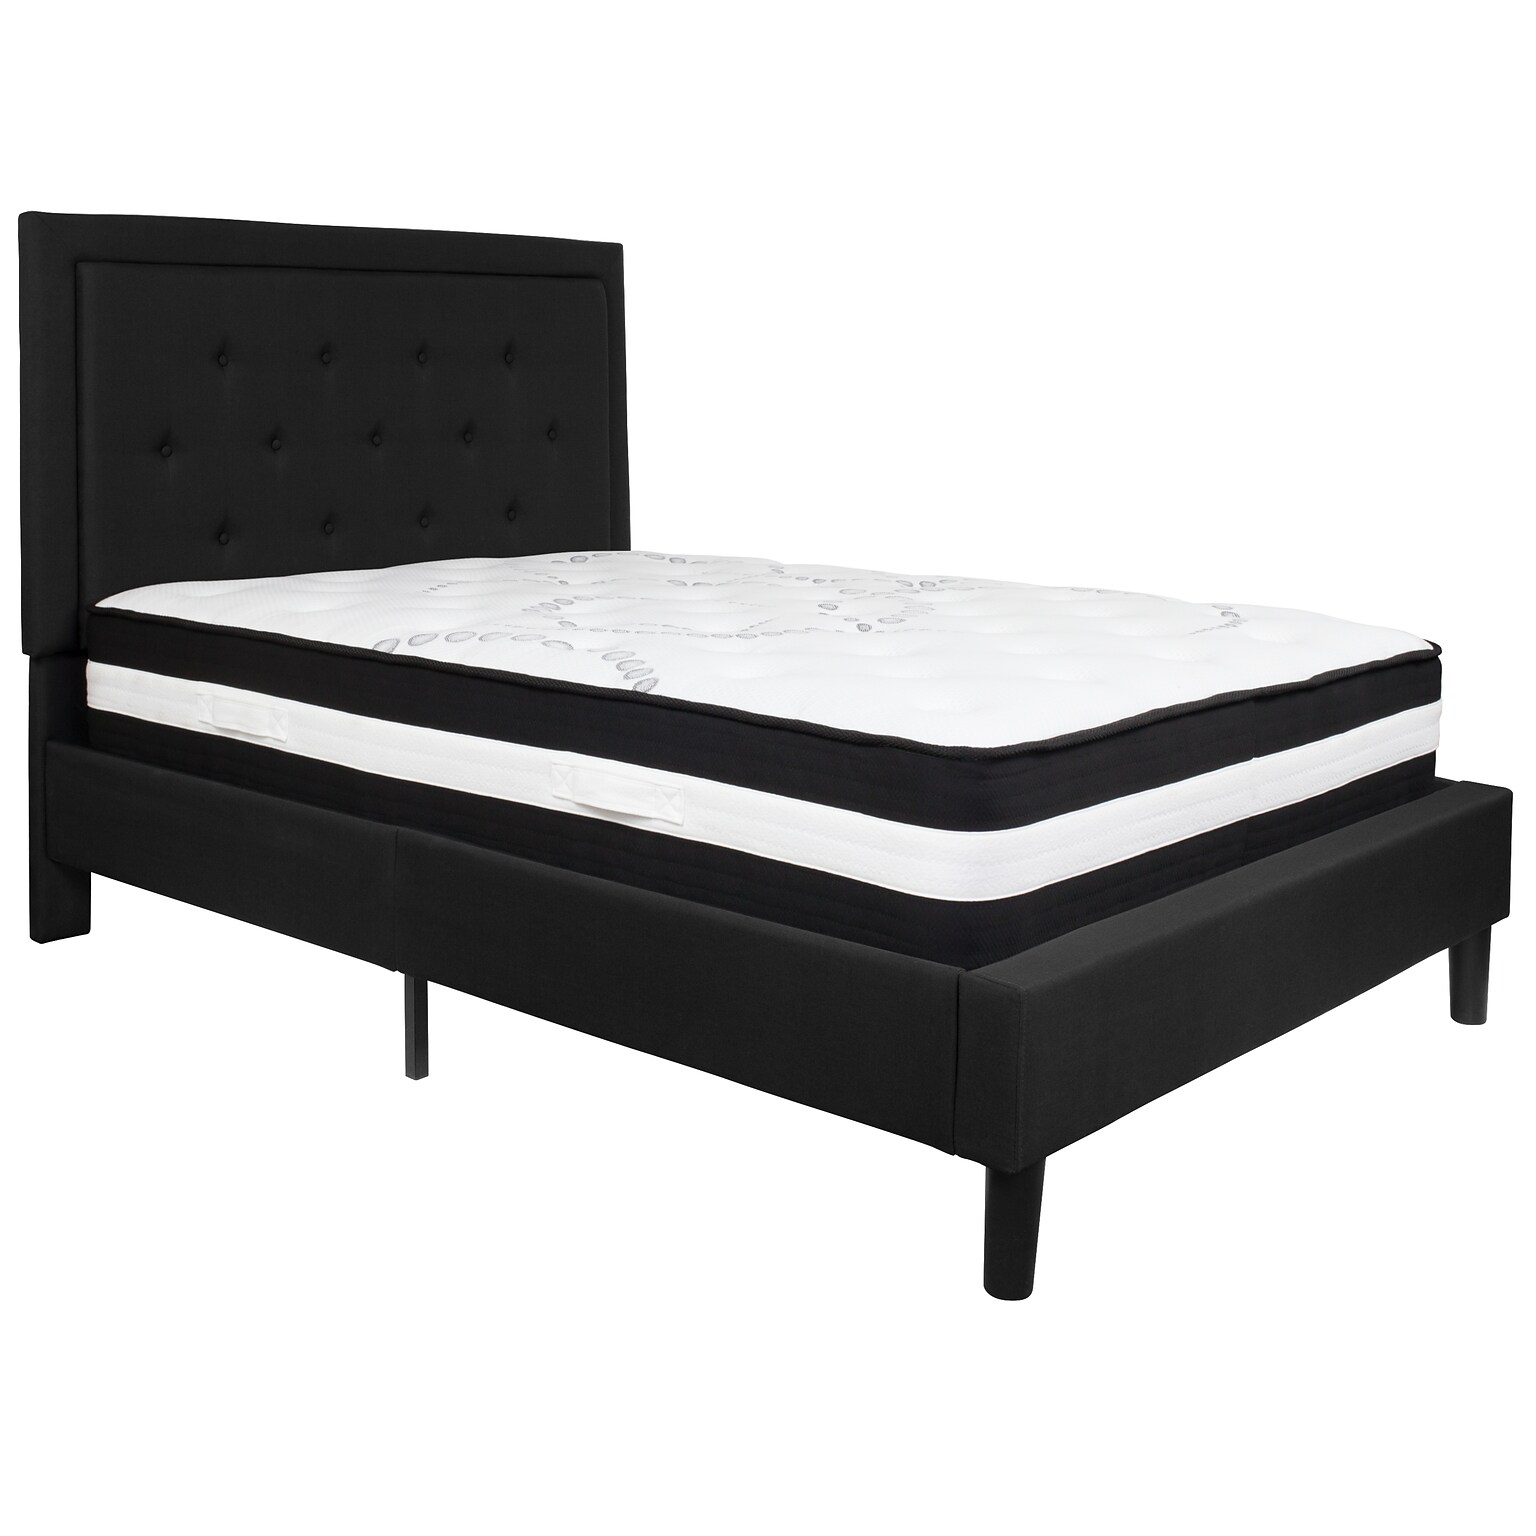 Flash Furniture Roxbury Tufted Upholstered Platform Bed in Black Fabric with Pocket Spring Mattress, Full (SLBM22)